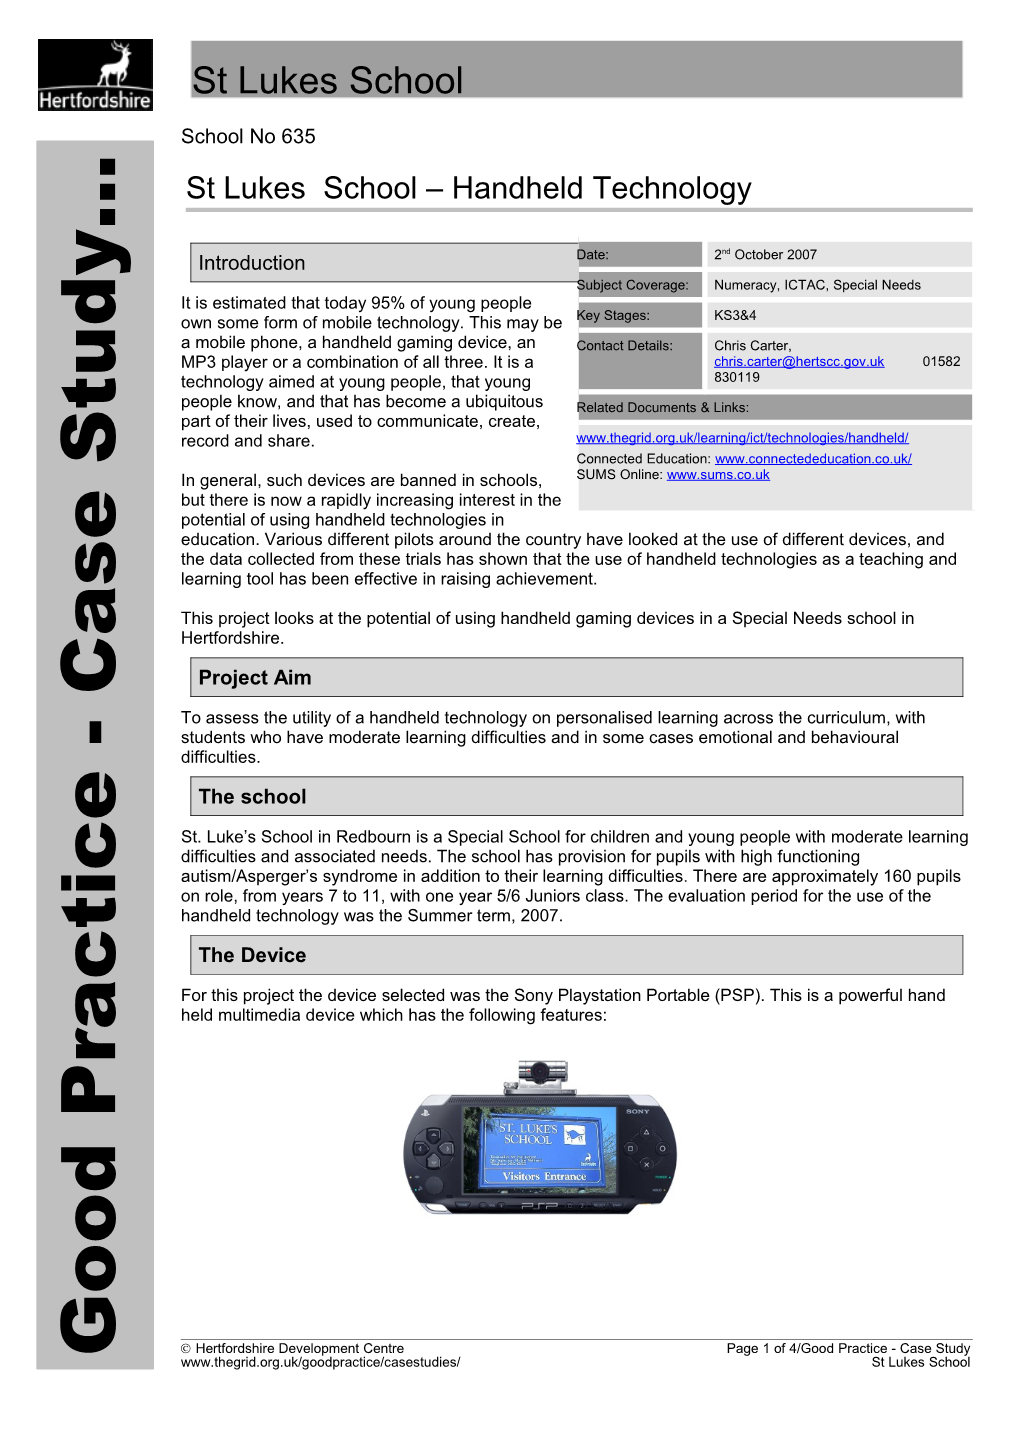 Good Practice - Case Study St Lukes School Handheld Technology